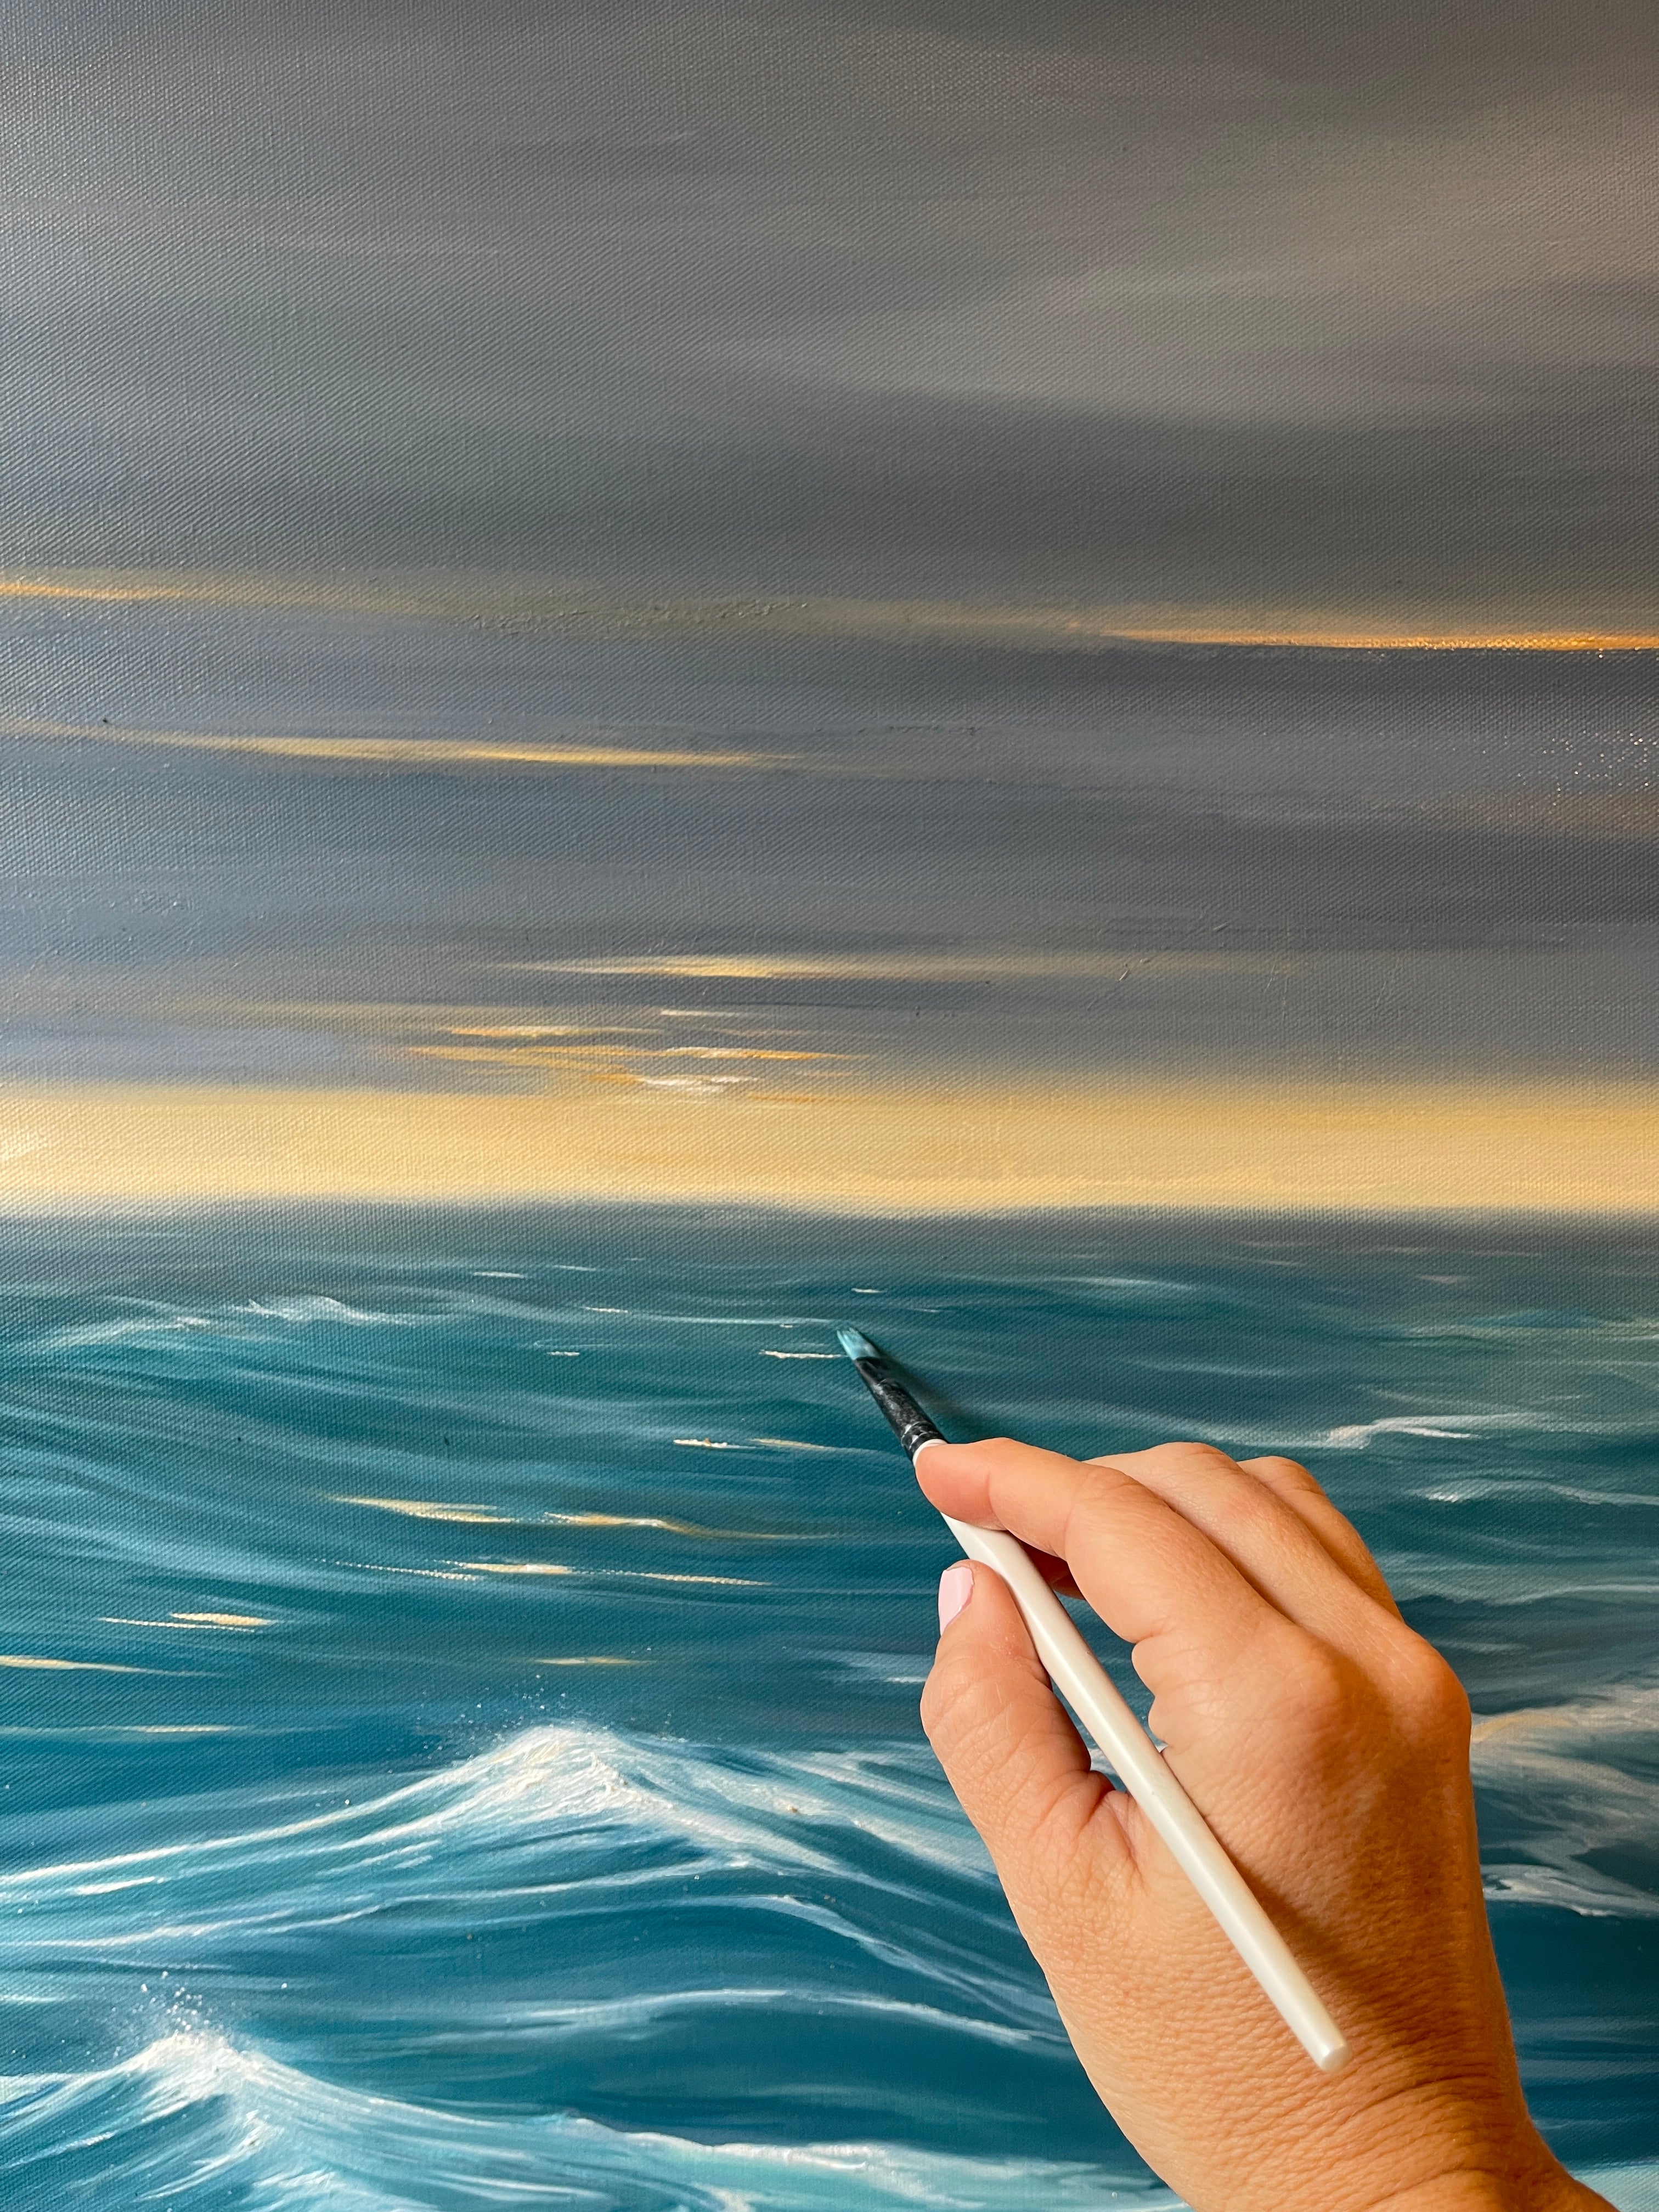 Painting Sunset Ocean Waves